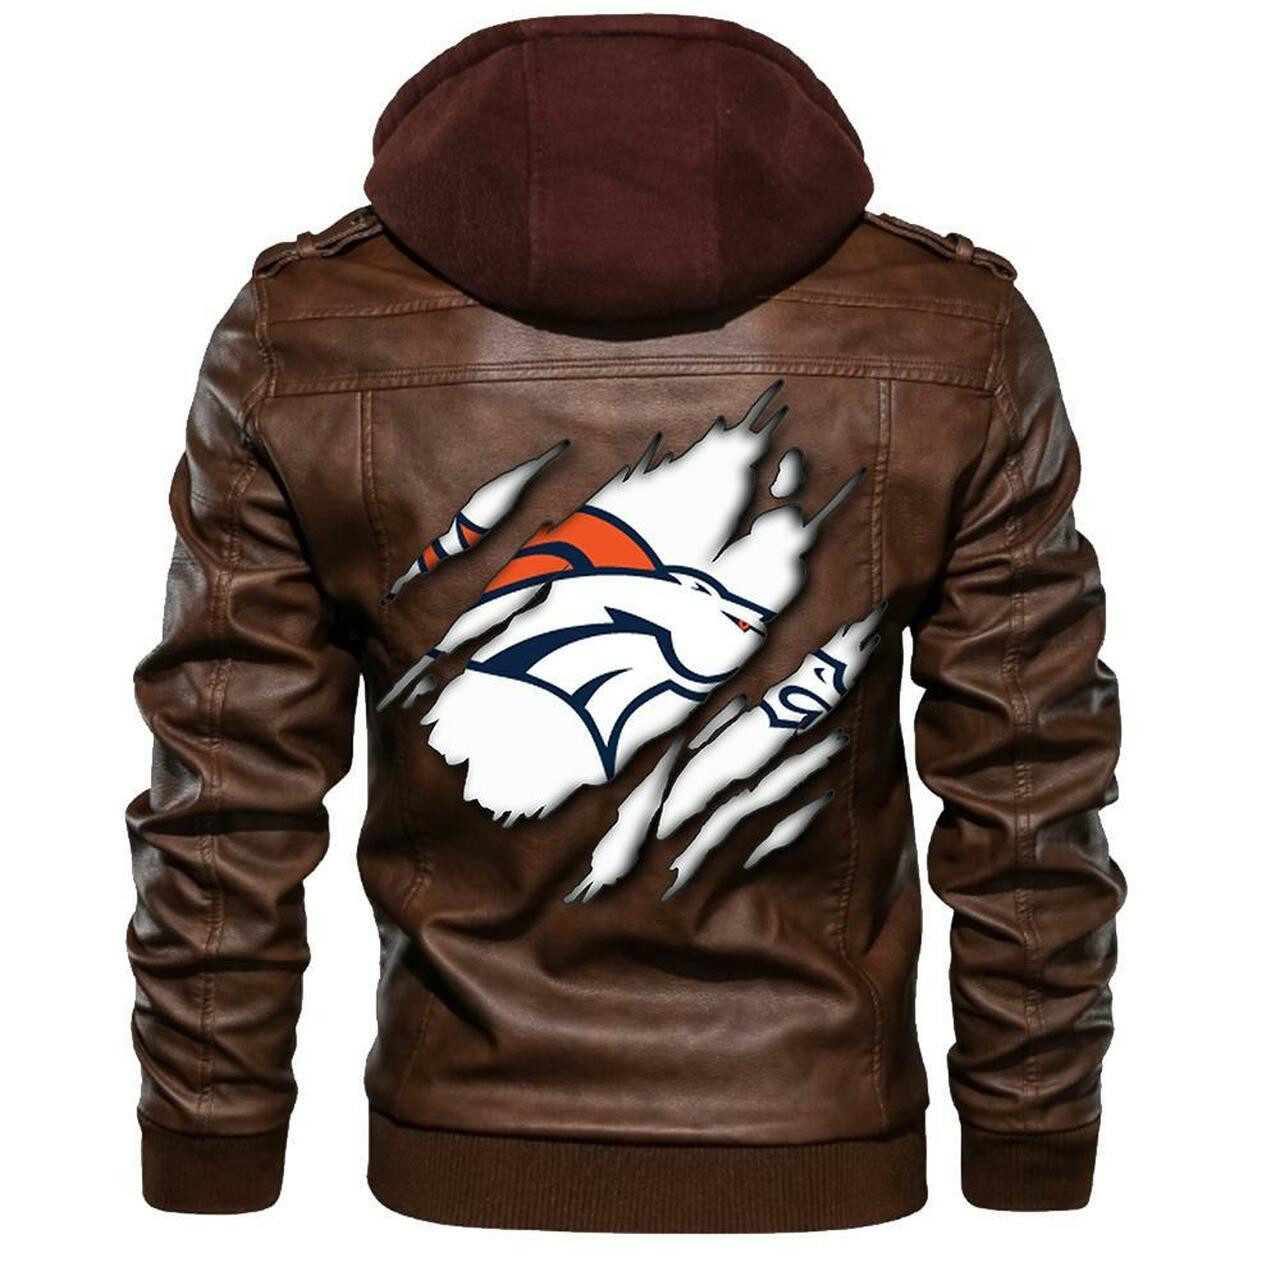 Top leather jacket Sells Best on Techcomshop 143